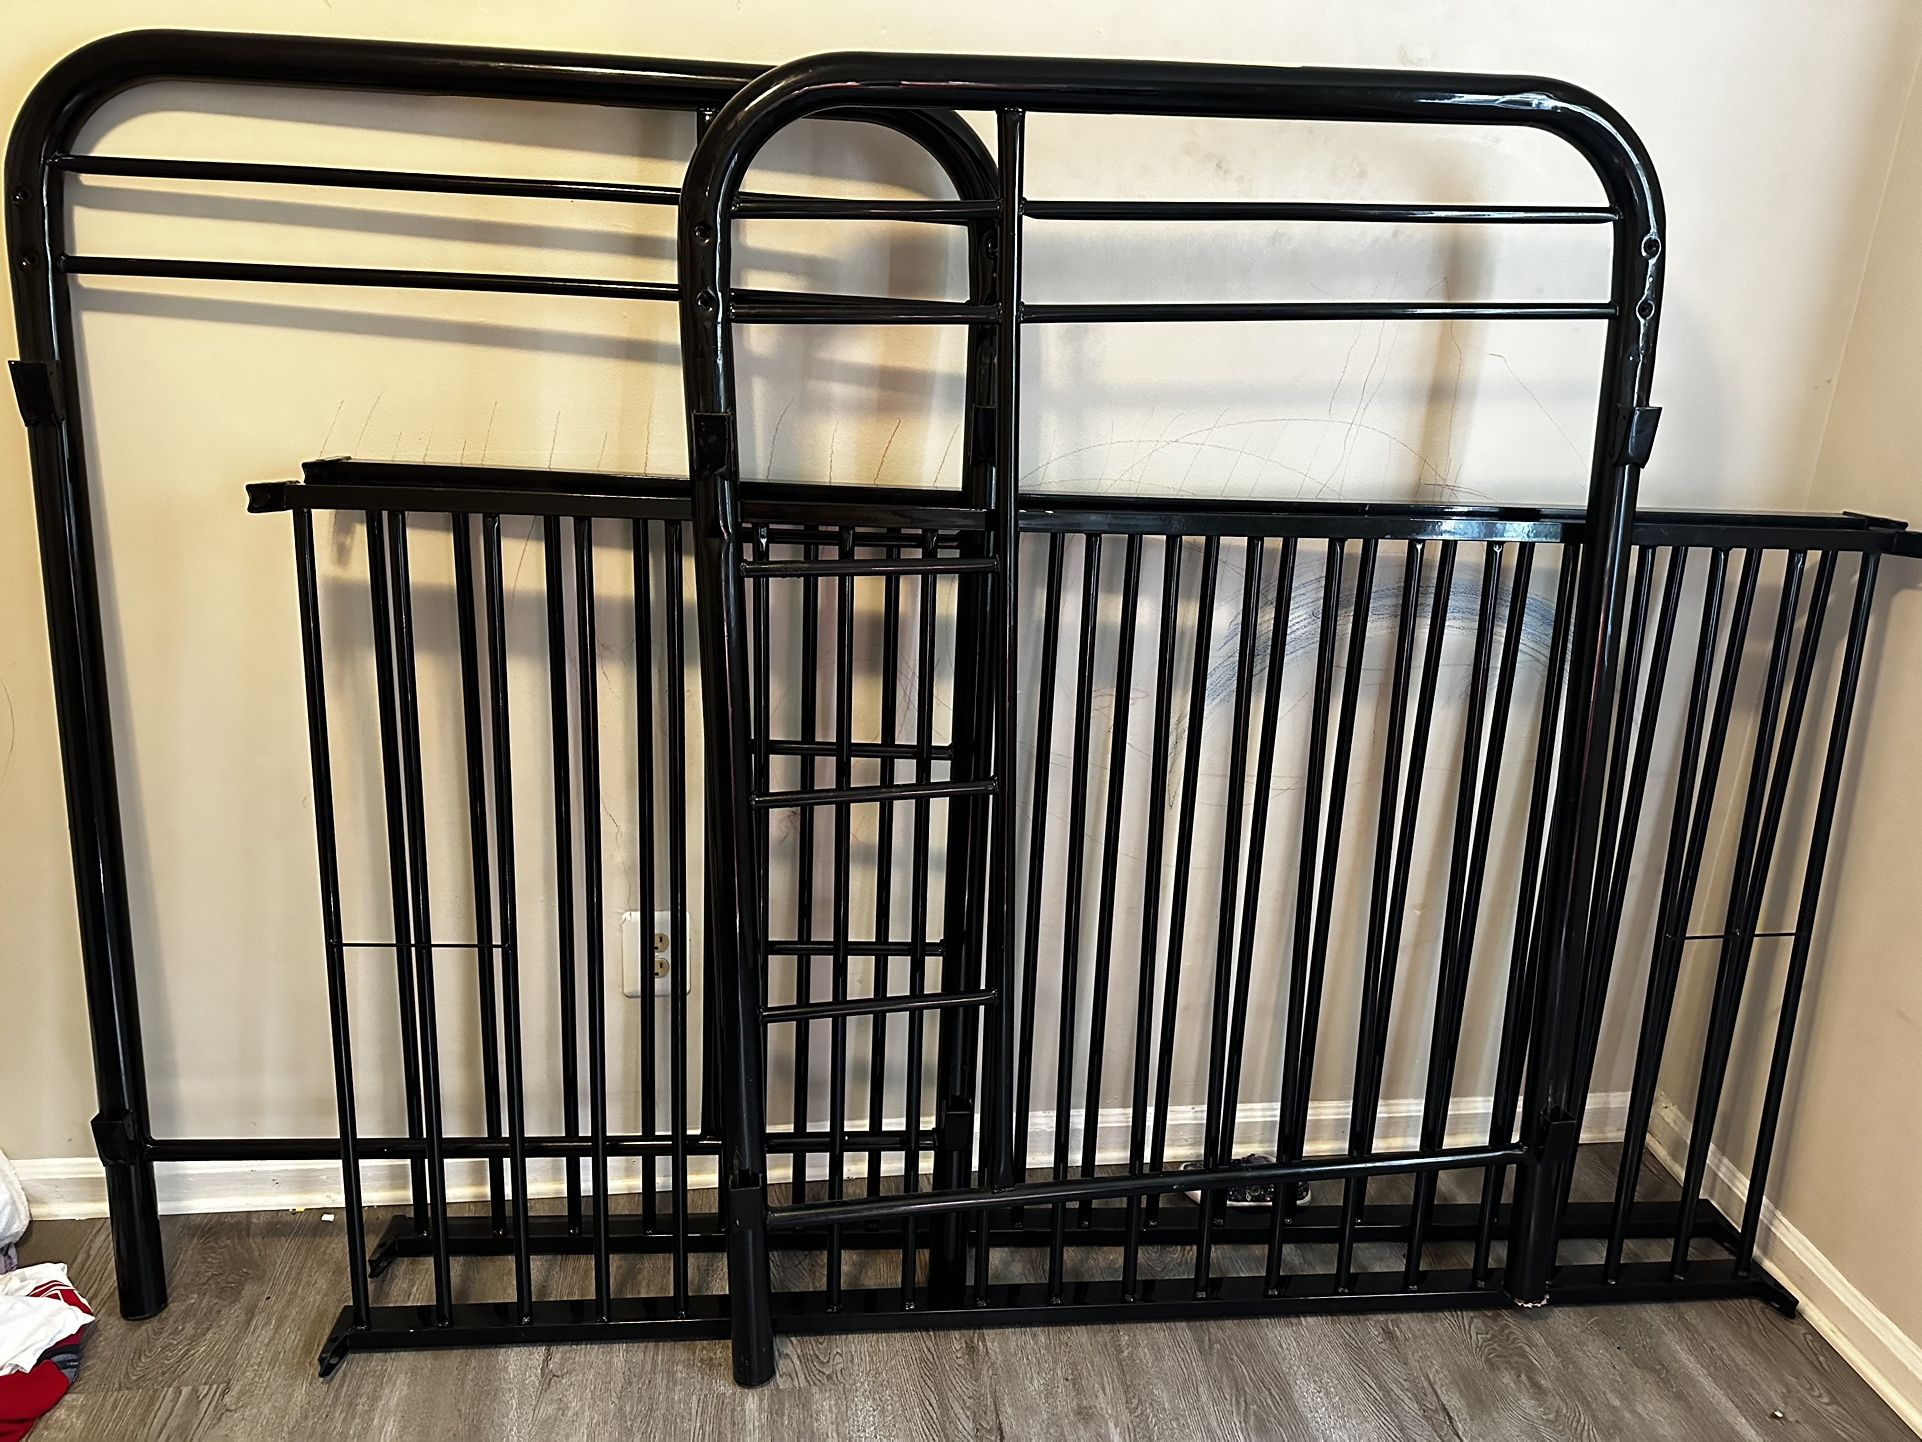 Black metal bunk bed